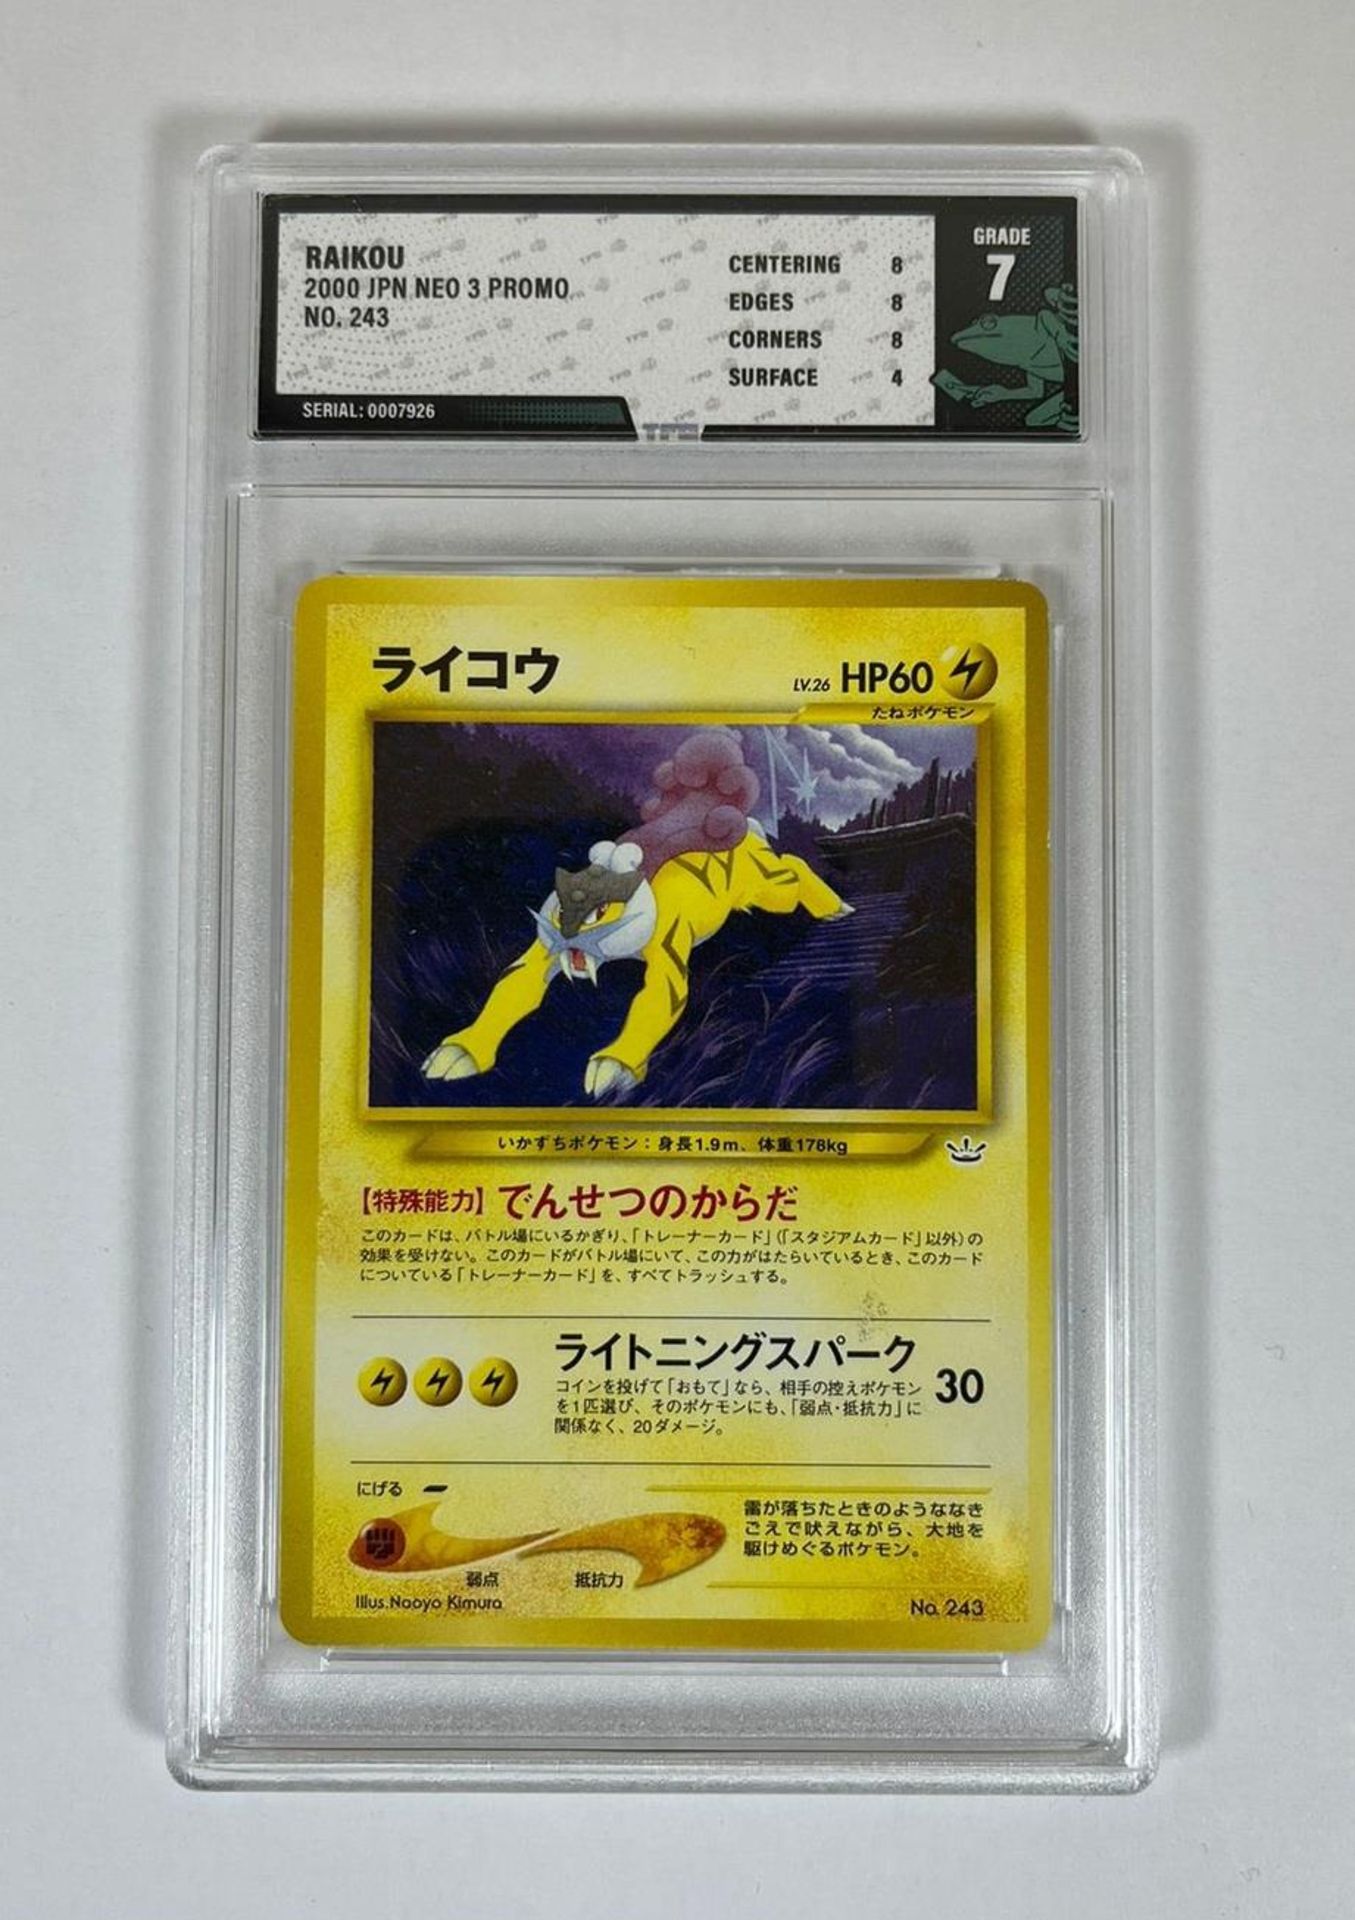 A GRADED POKEMON CARD - 2000 JAPANESE RAIKOU NEO 3 LEGEDNARY NO.243 - GRADE 7